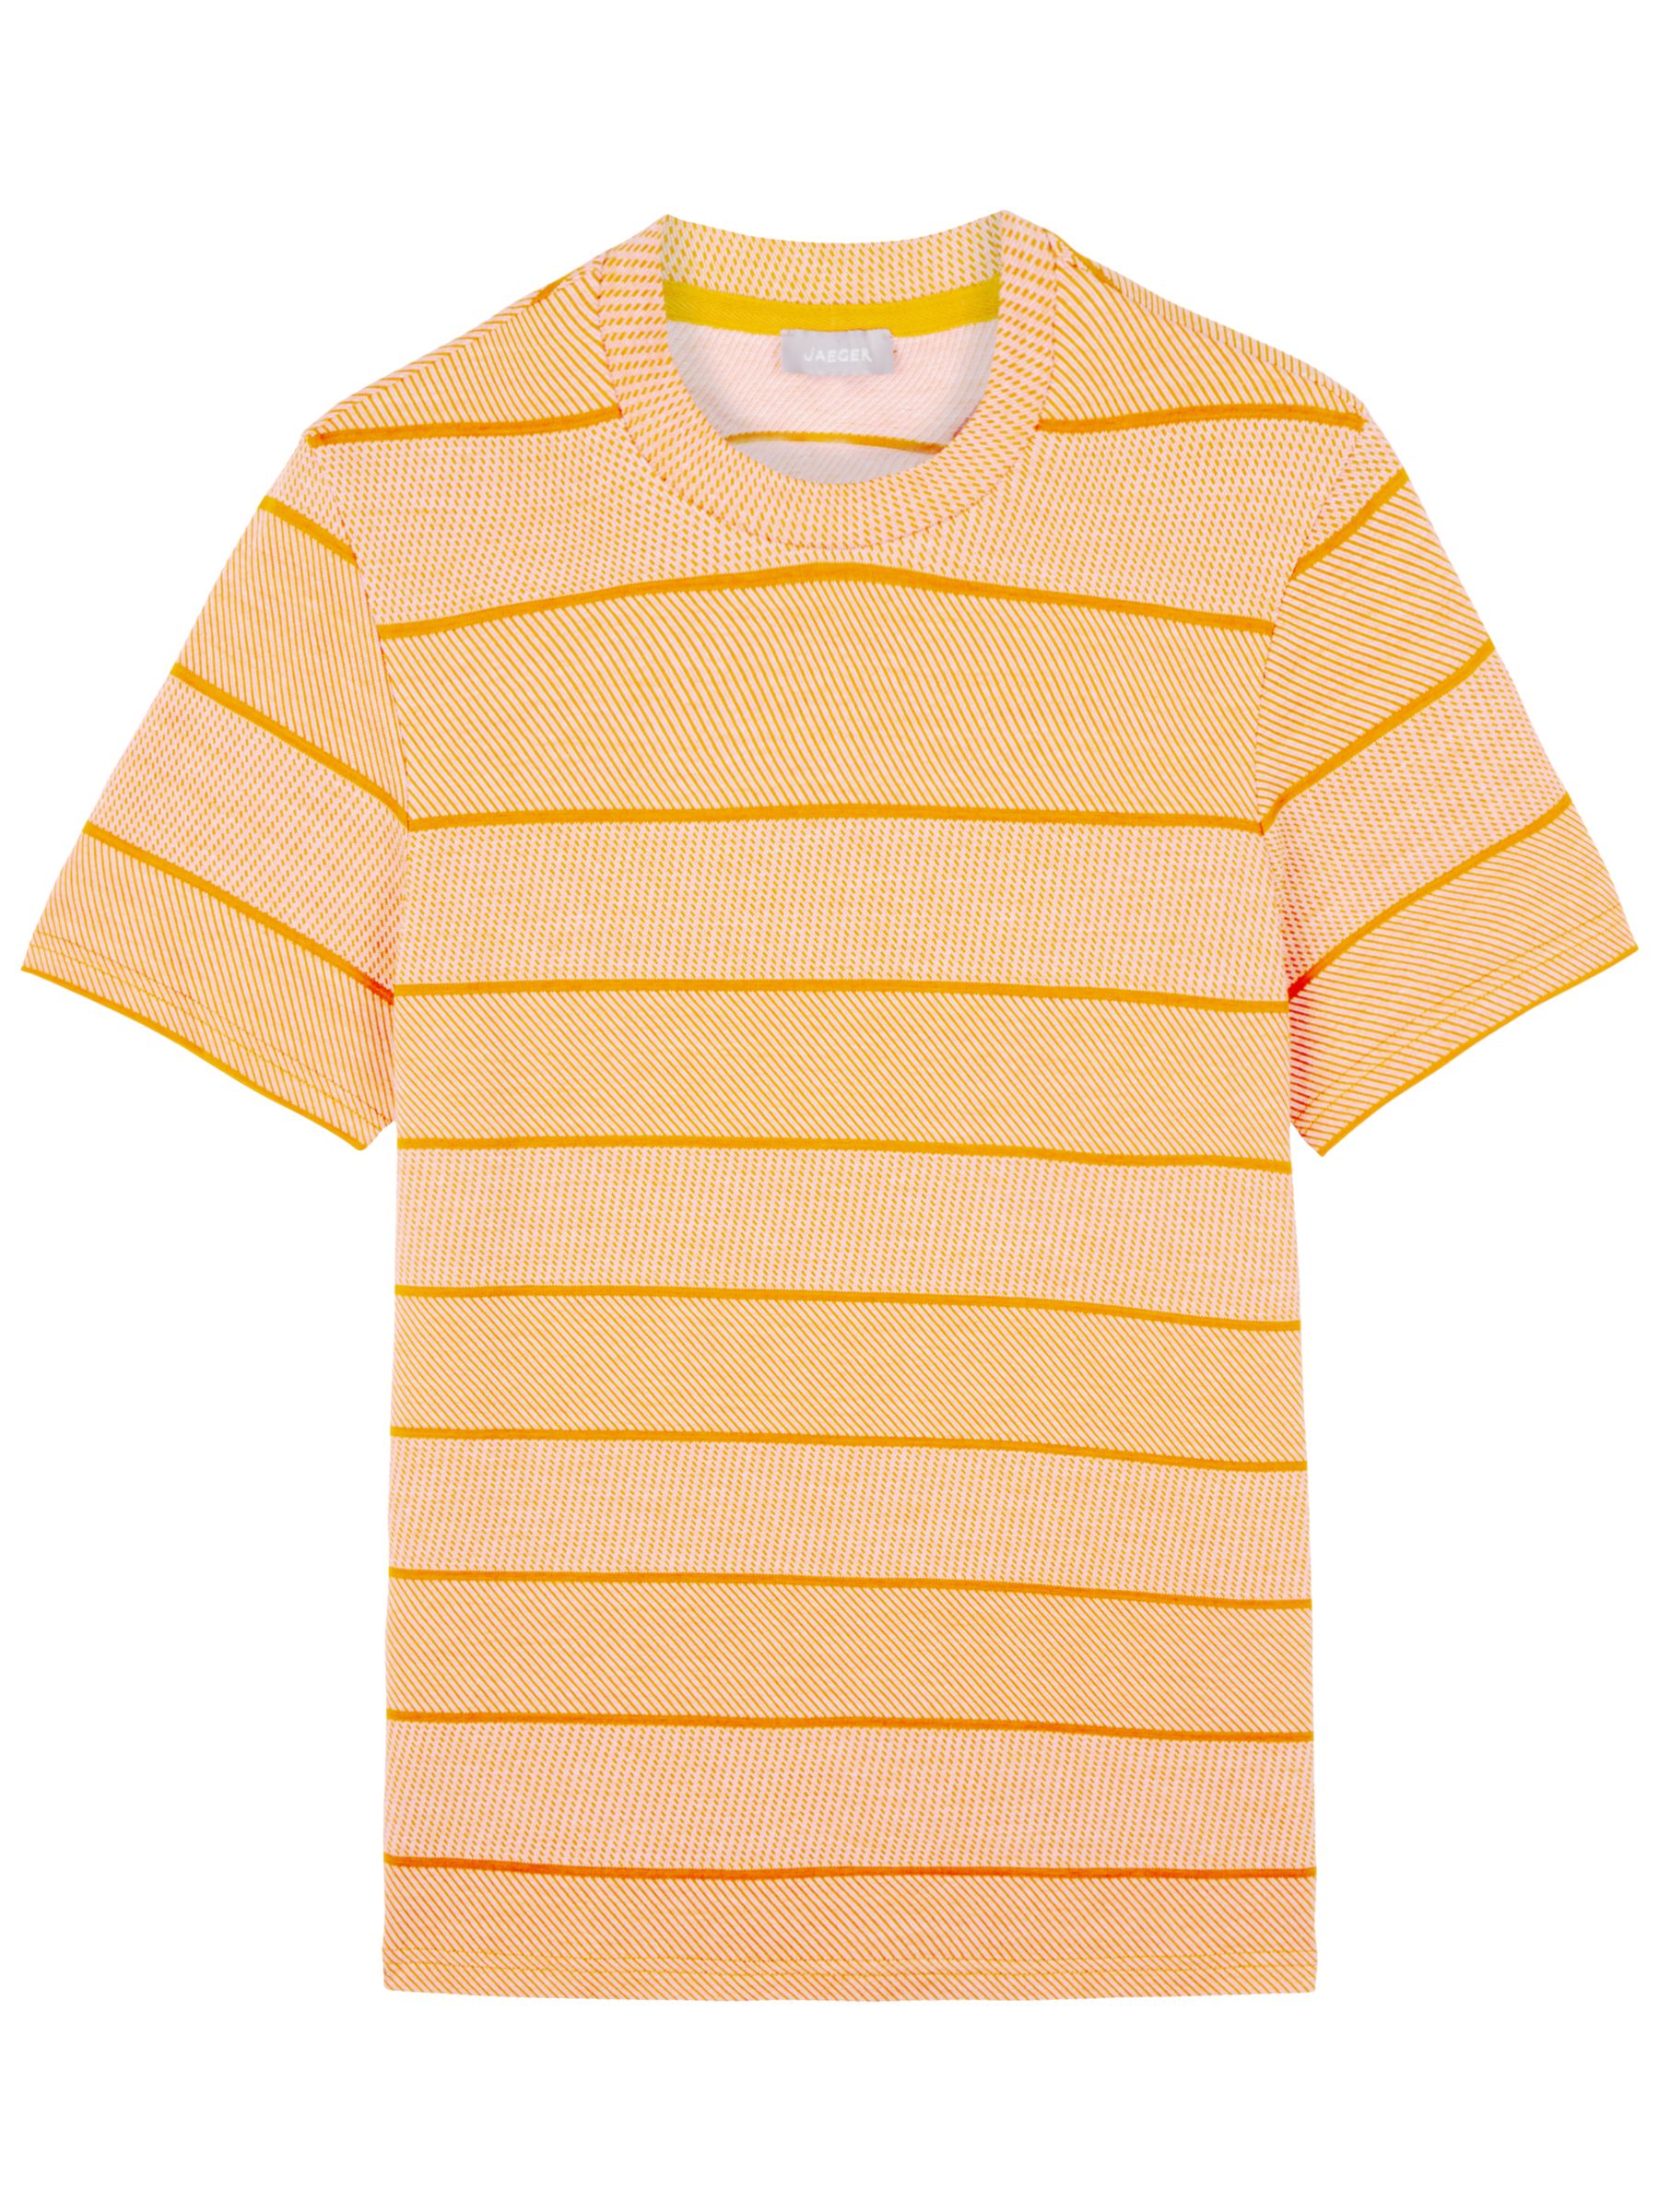 Jaeger Multi Stitch Stripe T-Shirt, Orange